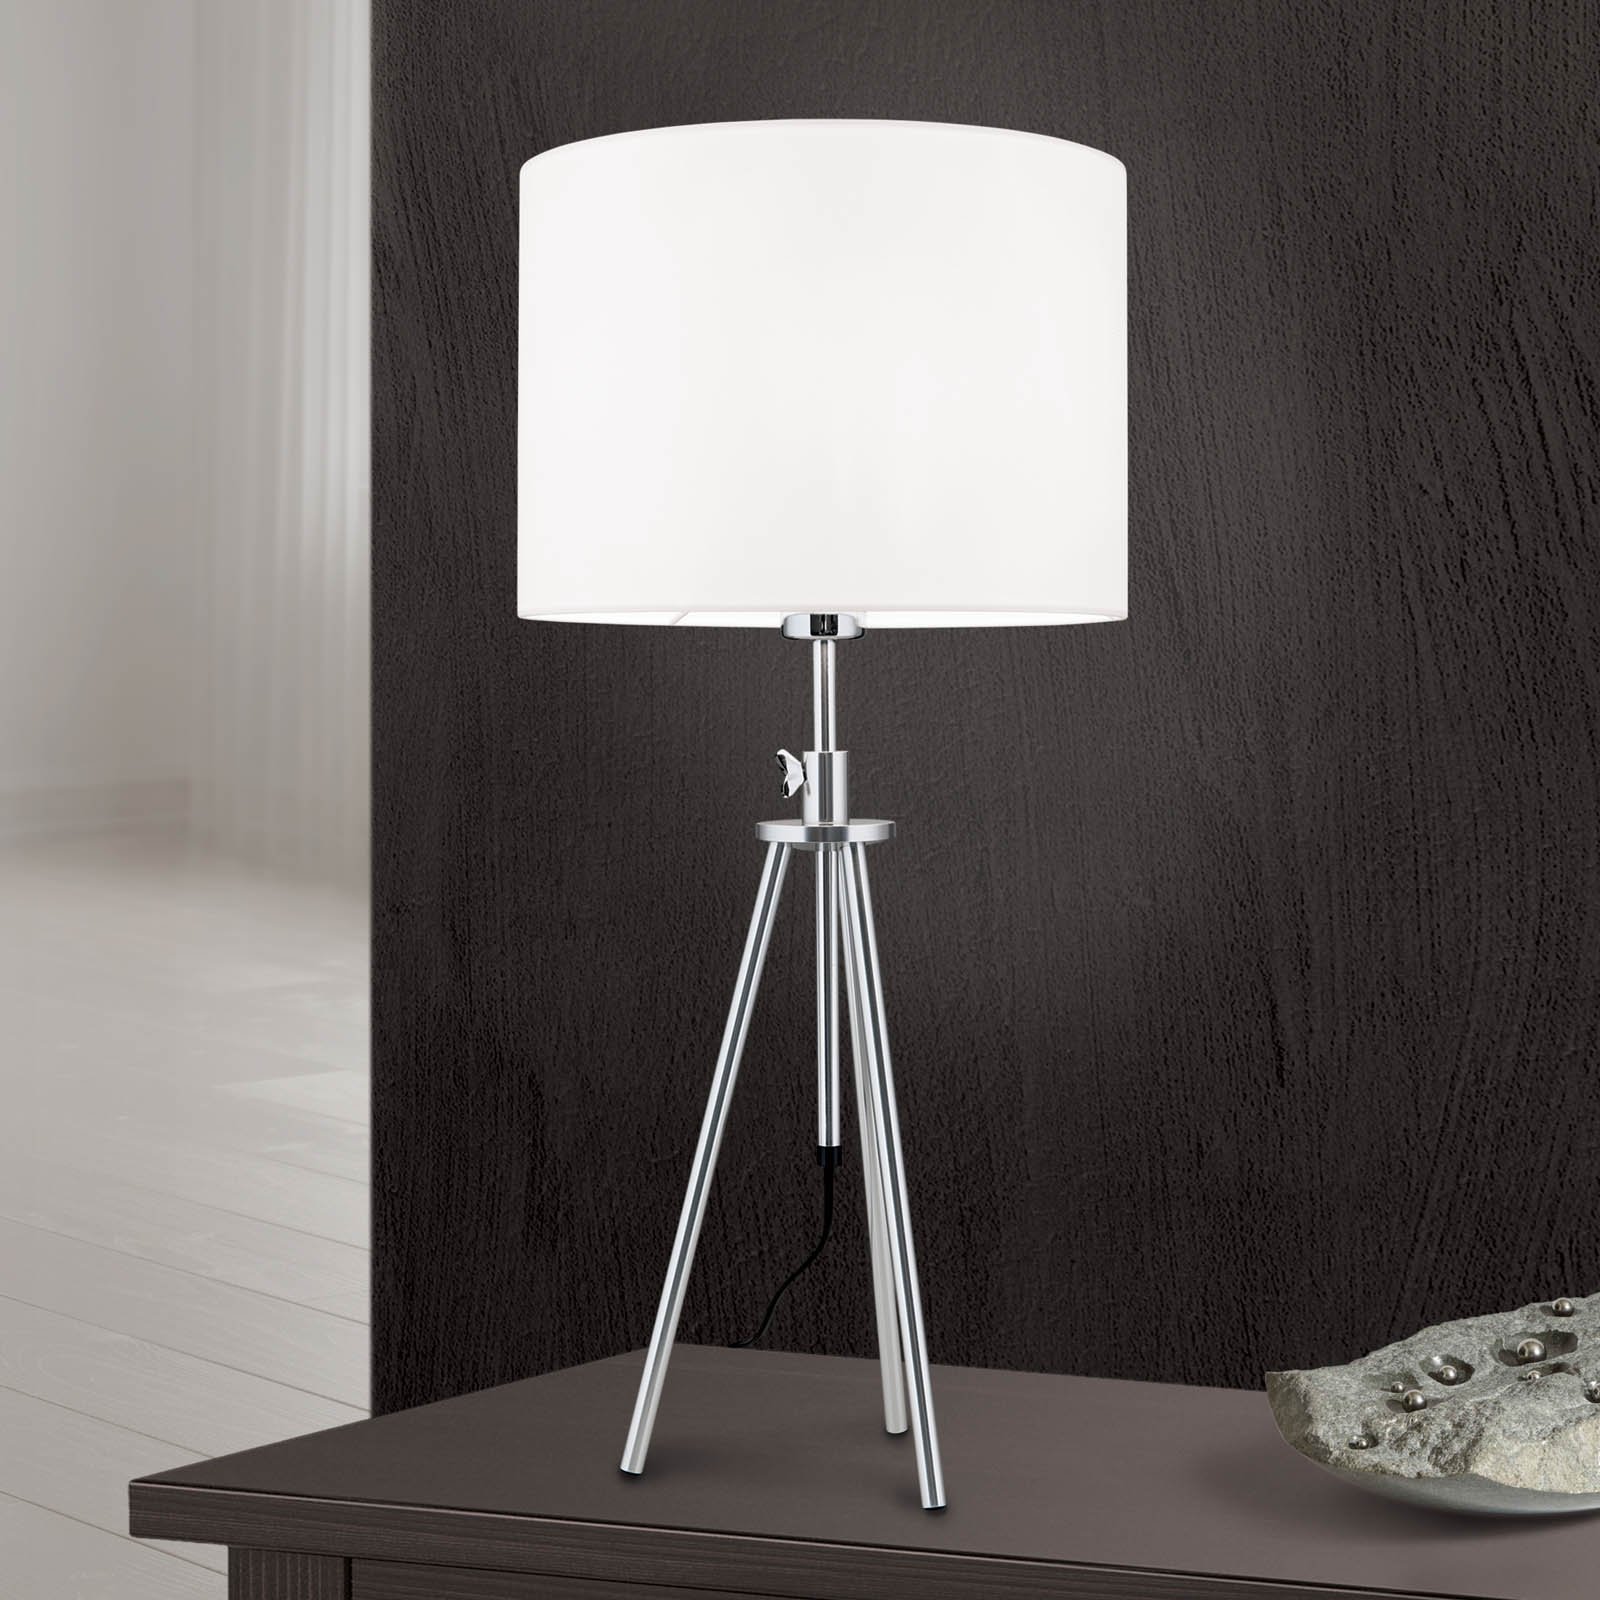 Roger table lamp, tripod, height-adjustable